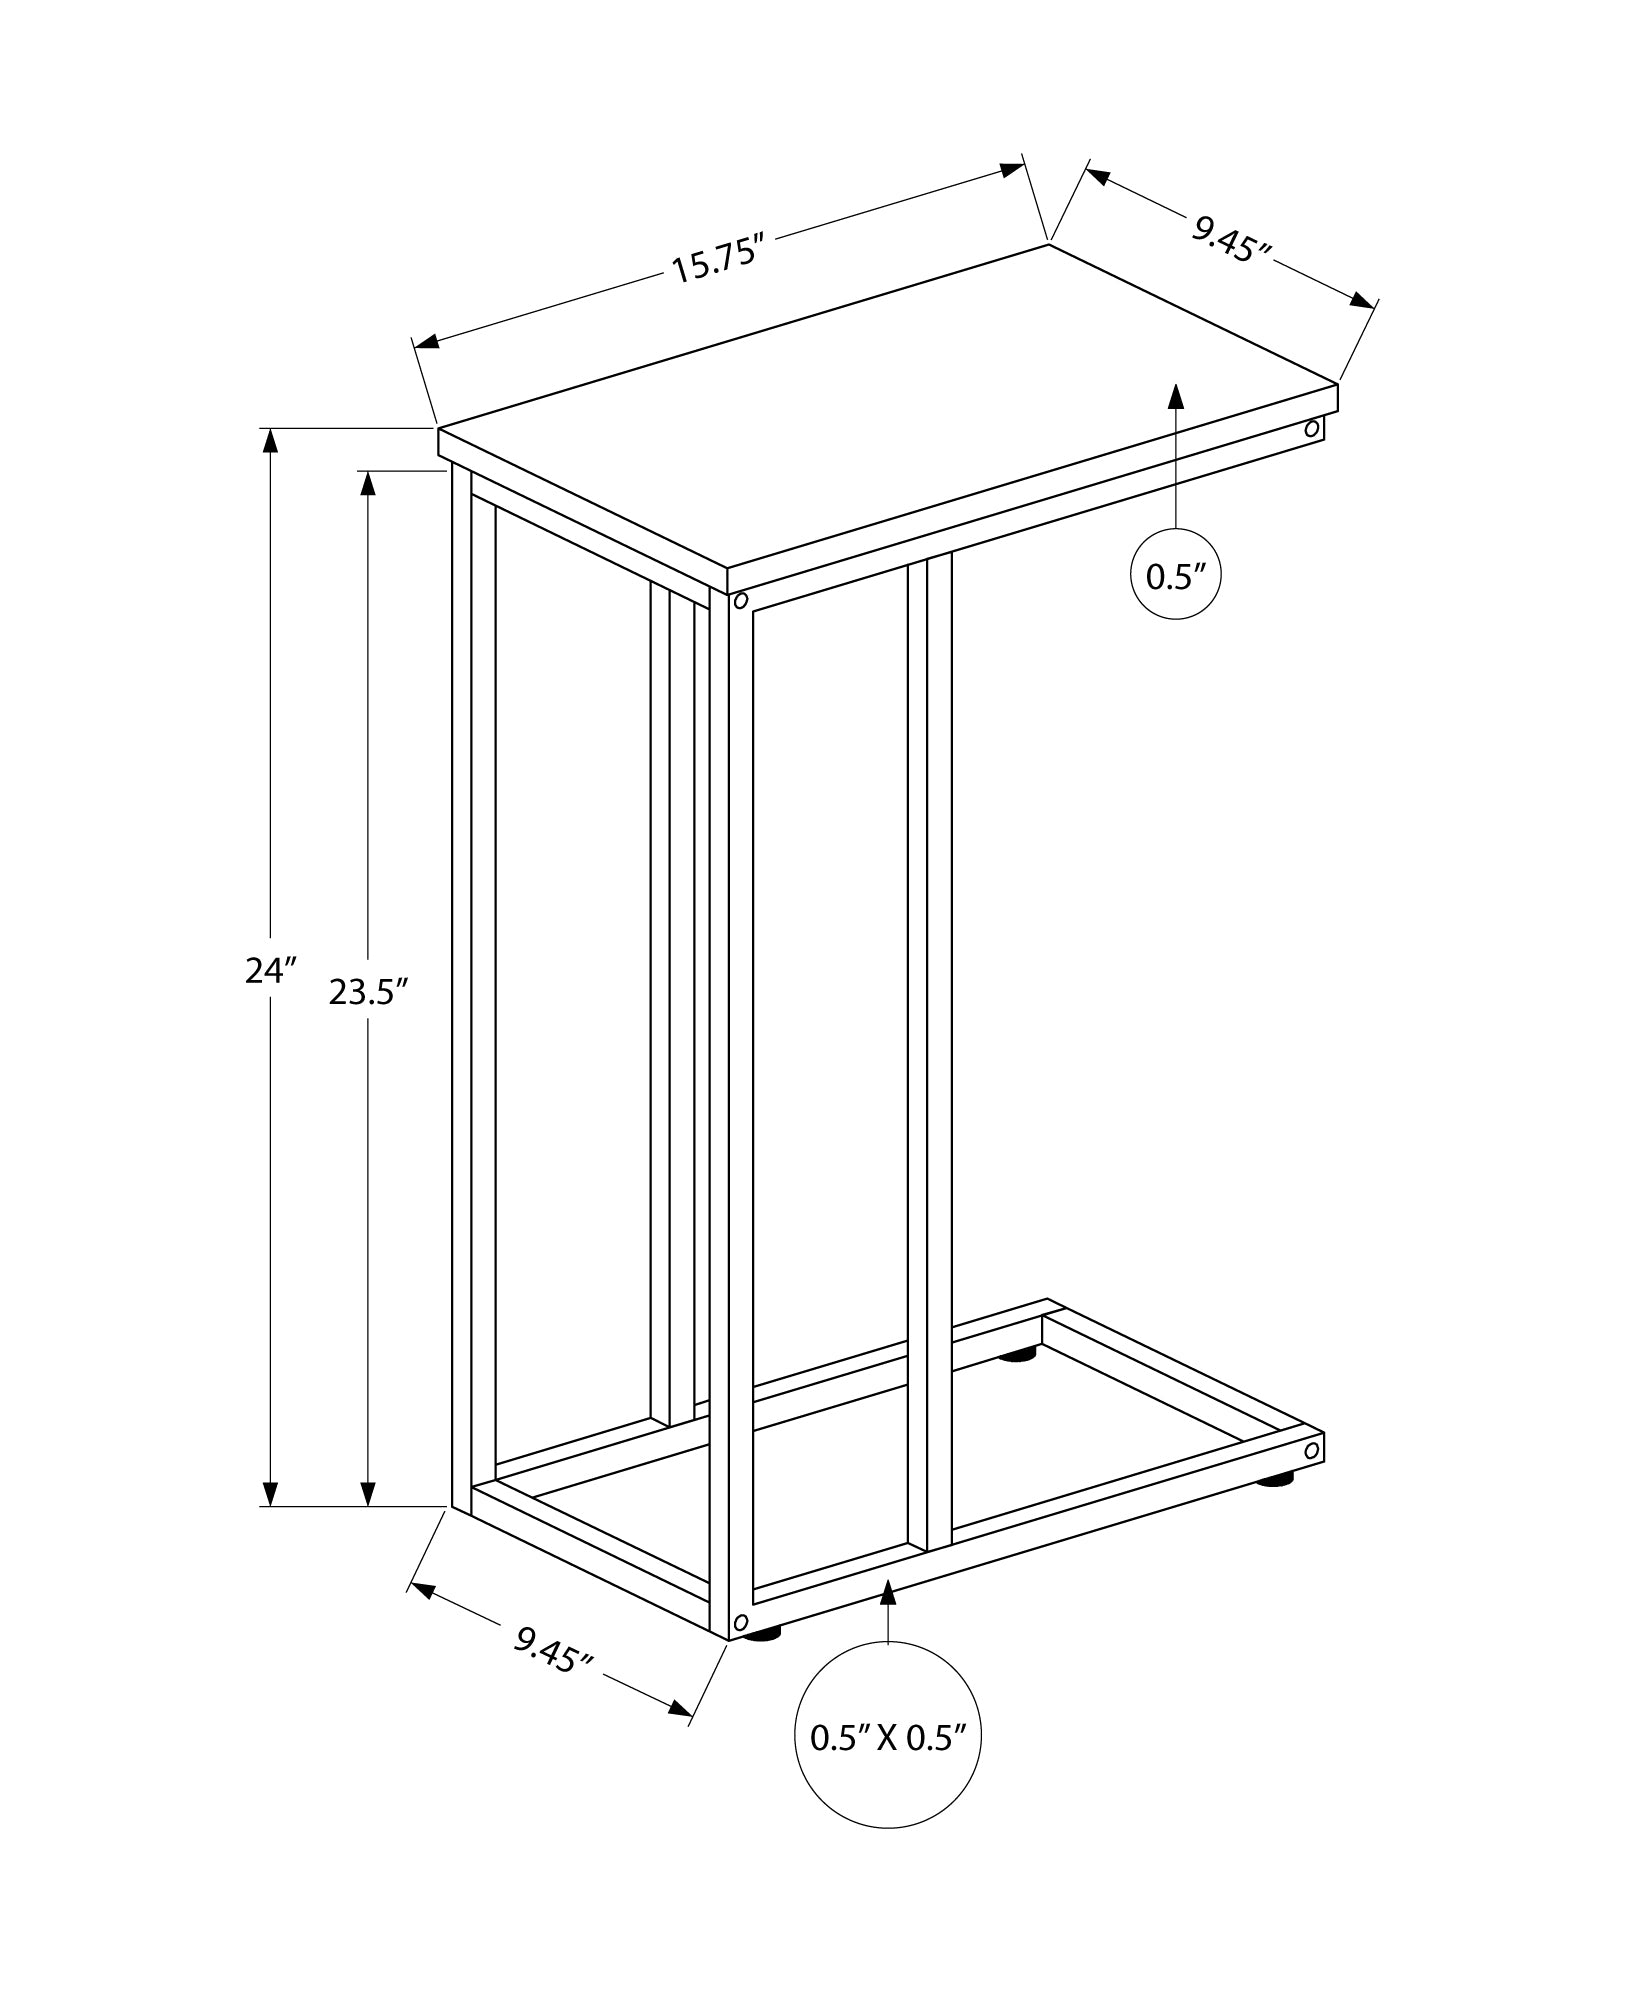 MN-403760    Side Table / C Table - Rectangular / Metal Frame - White